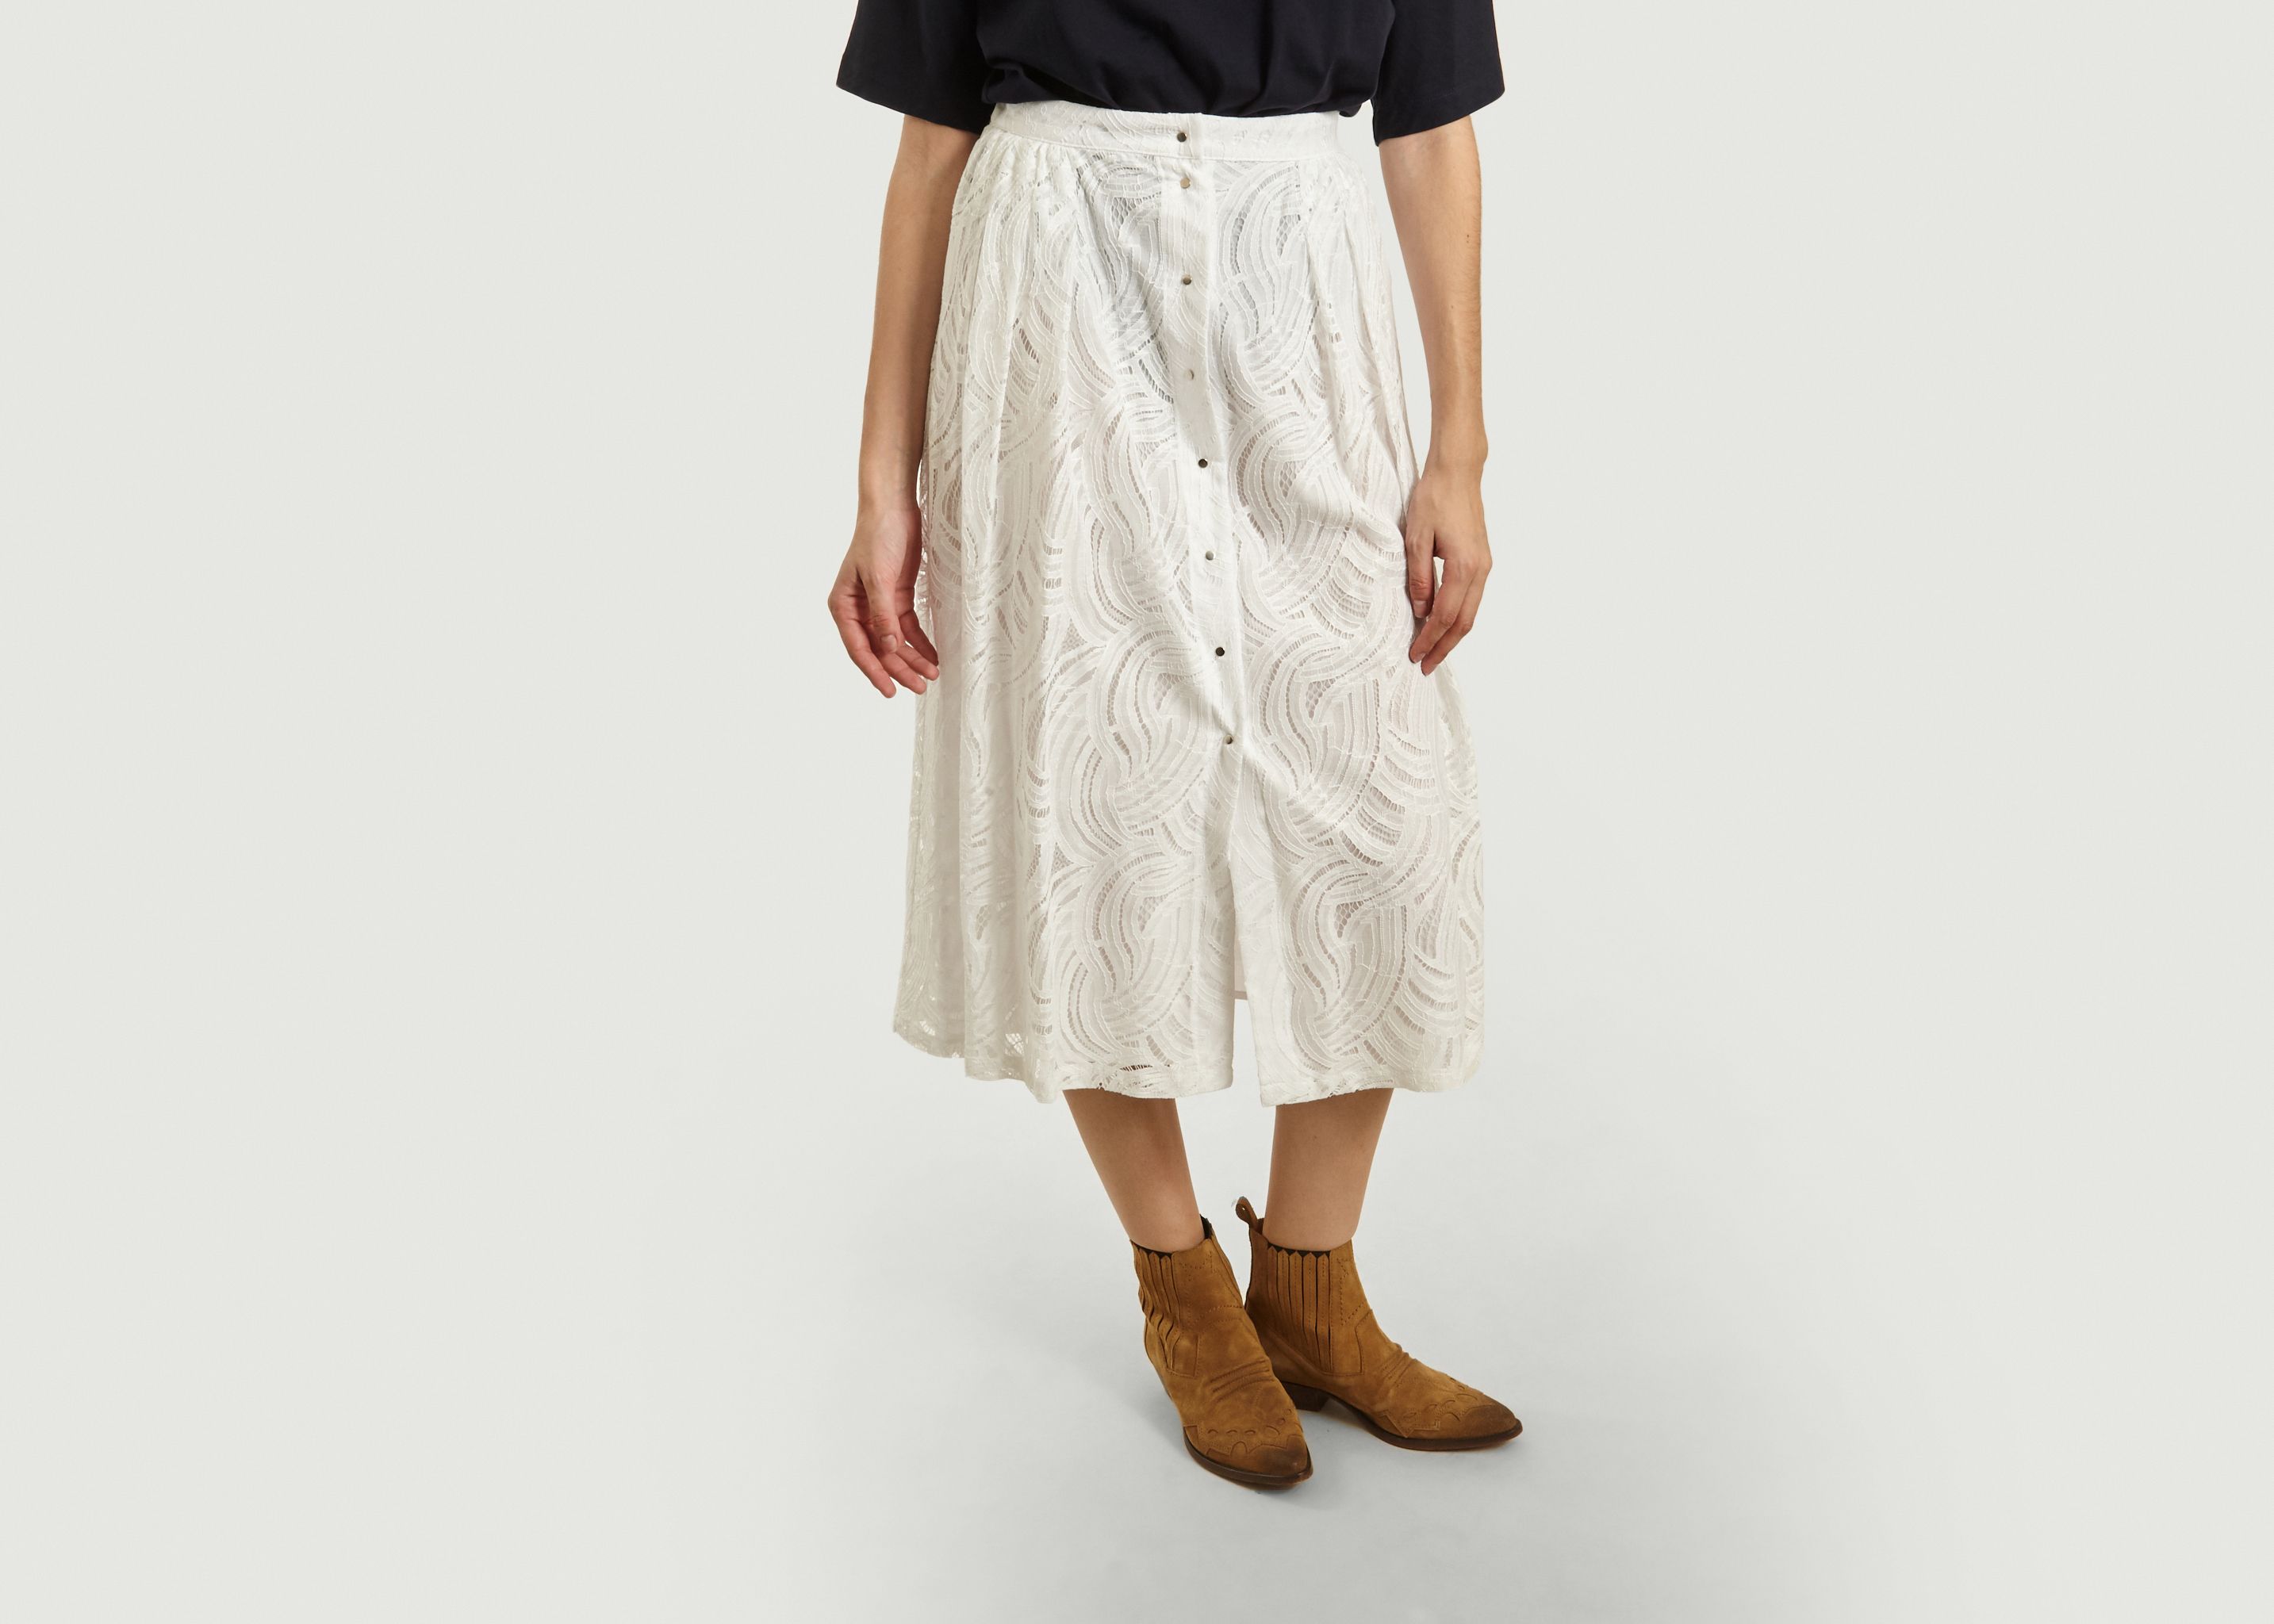  Mendes Long Embroidered Skirt - Roseanna